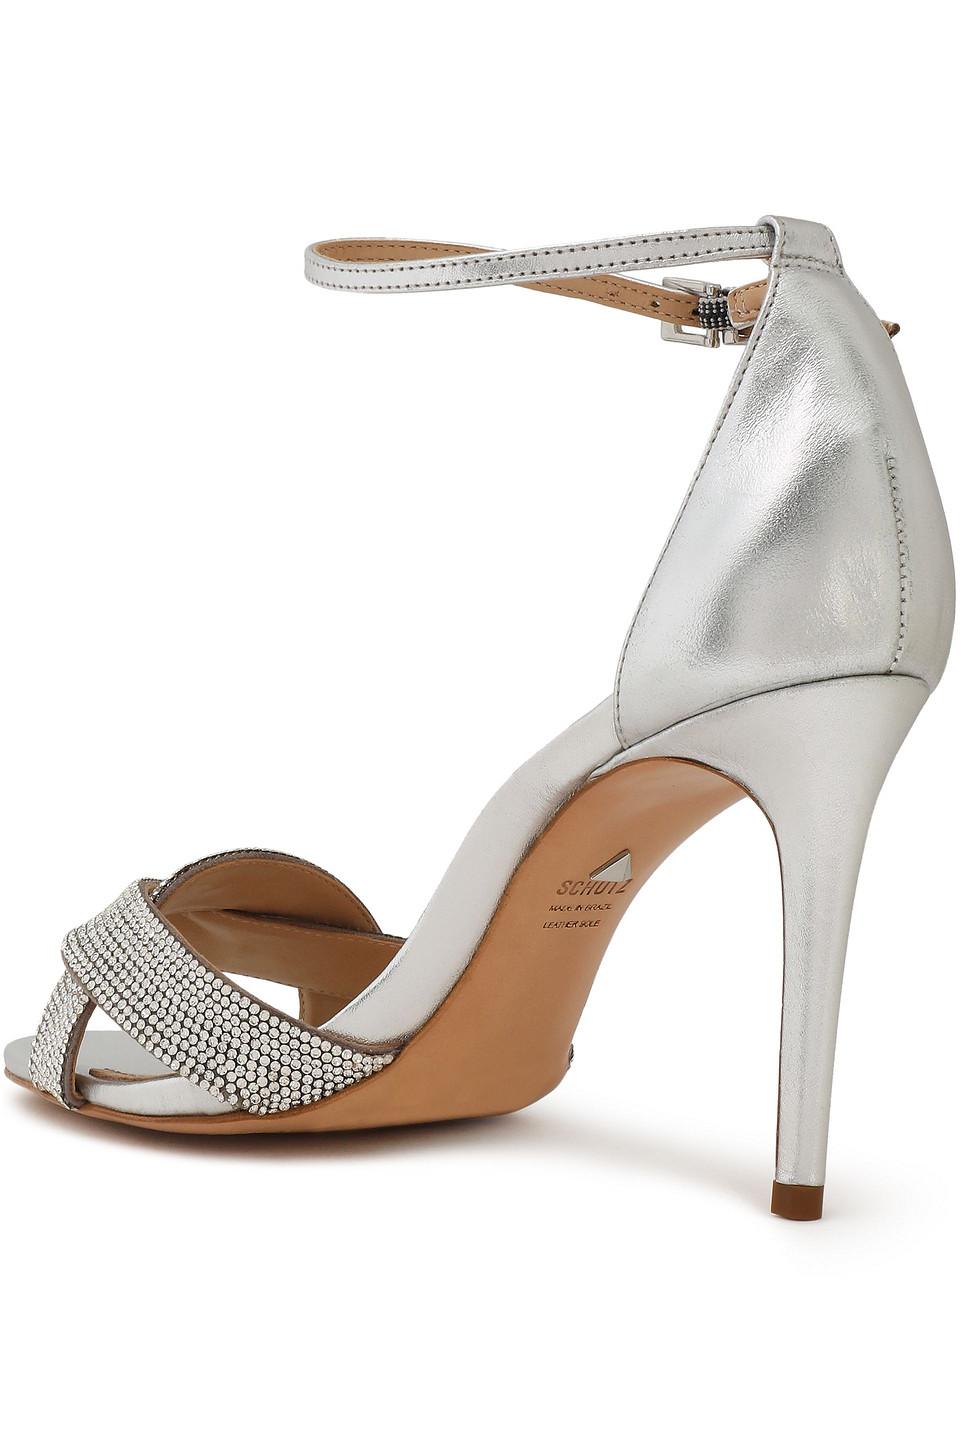 Schutz Leather Jolita Crystal-embellished Suede Sandals Silver in ...